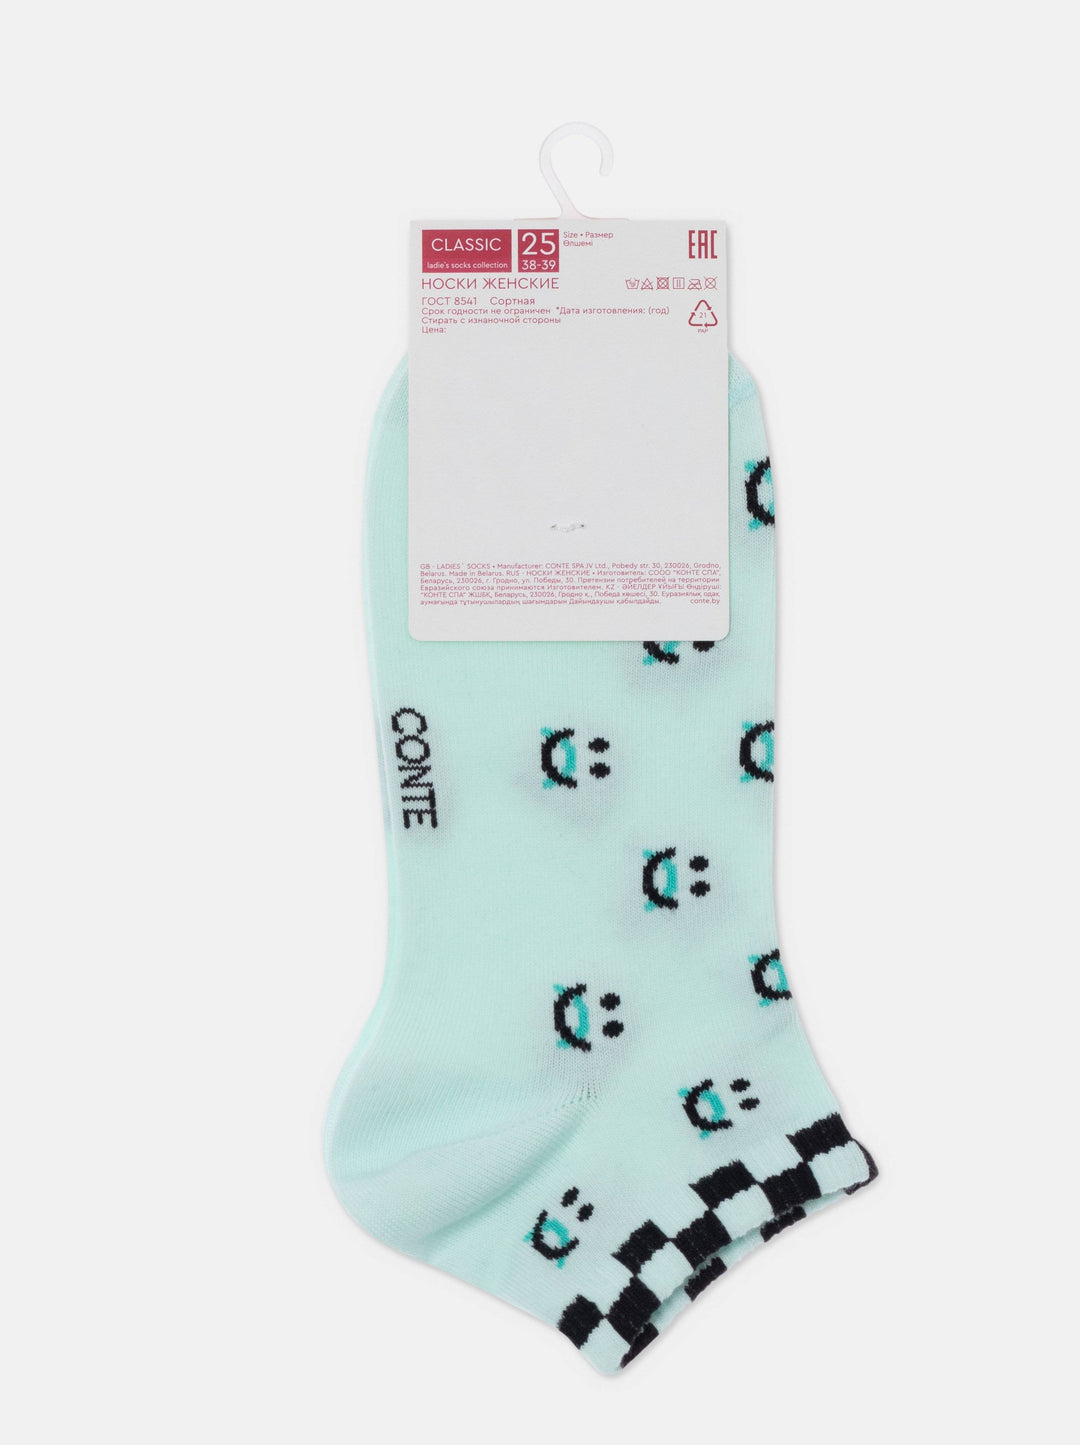 Cotton Ankle Socks Conte Classic - 439